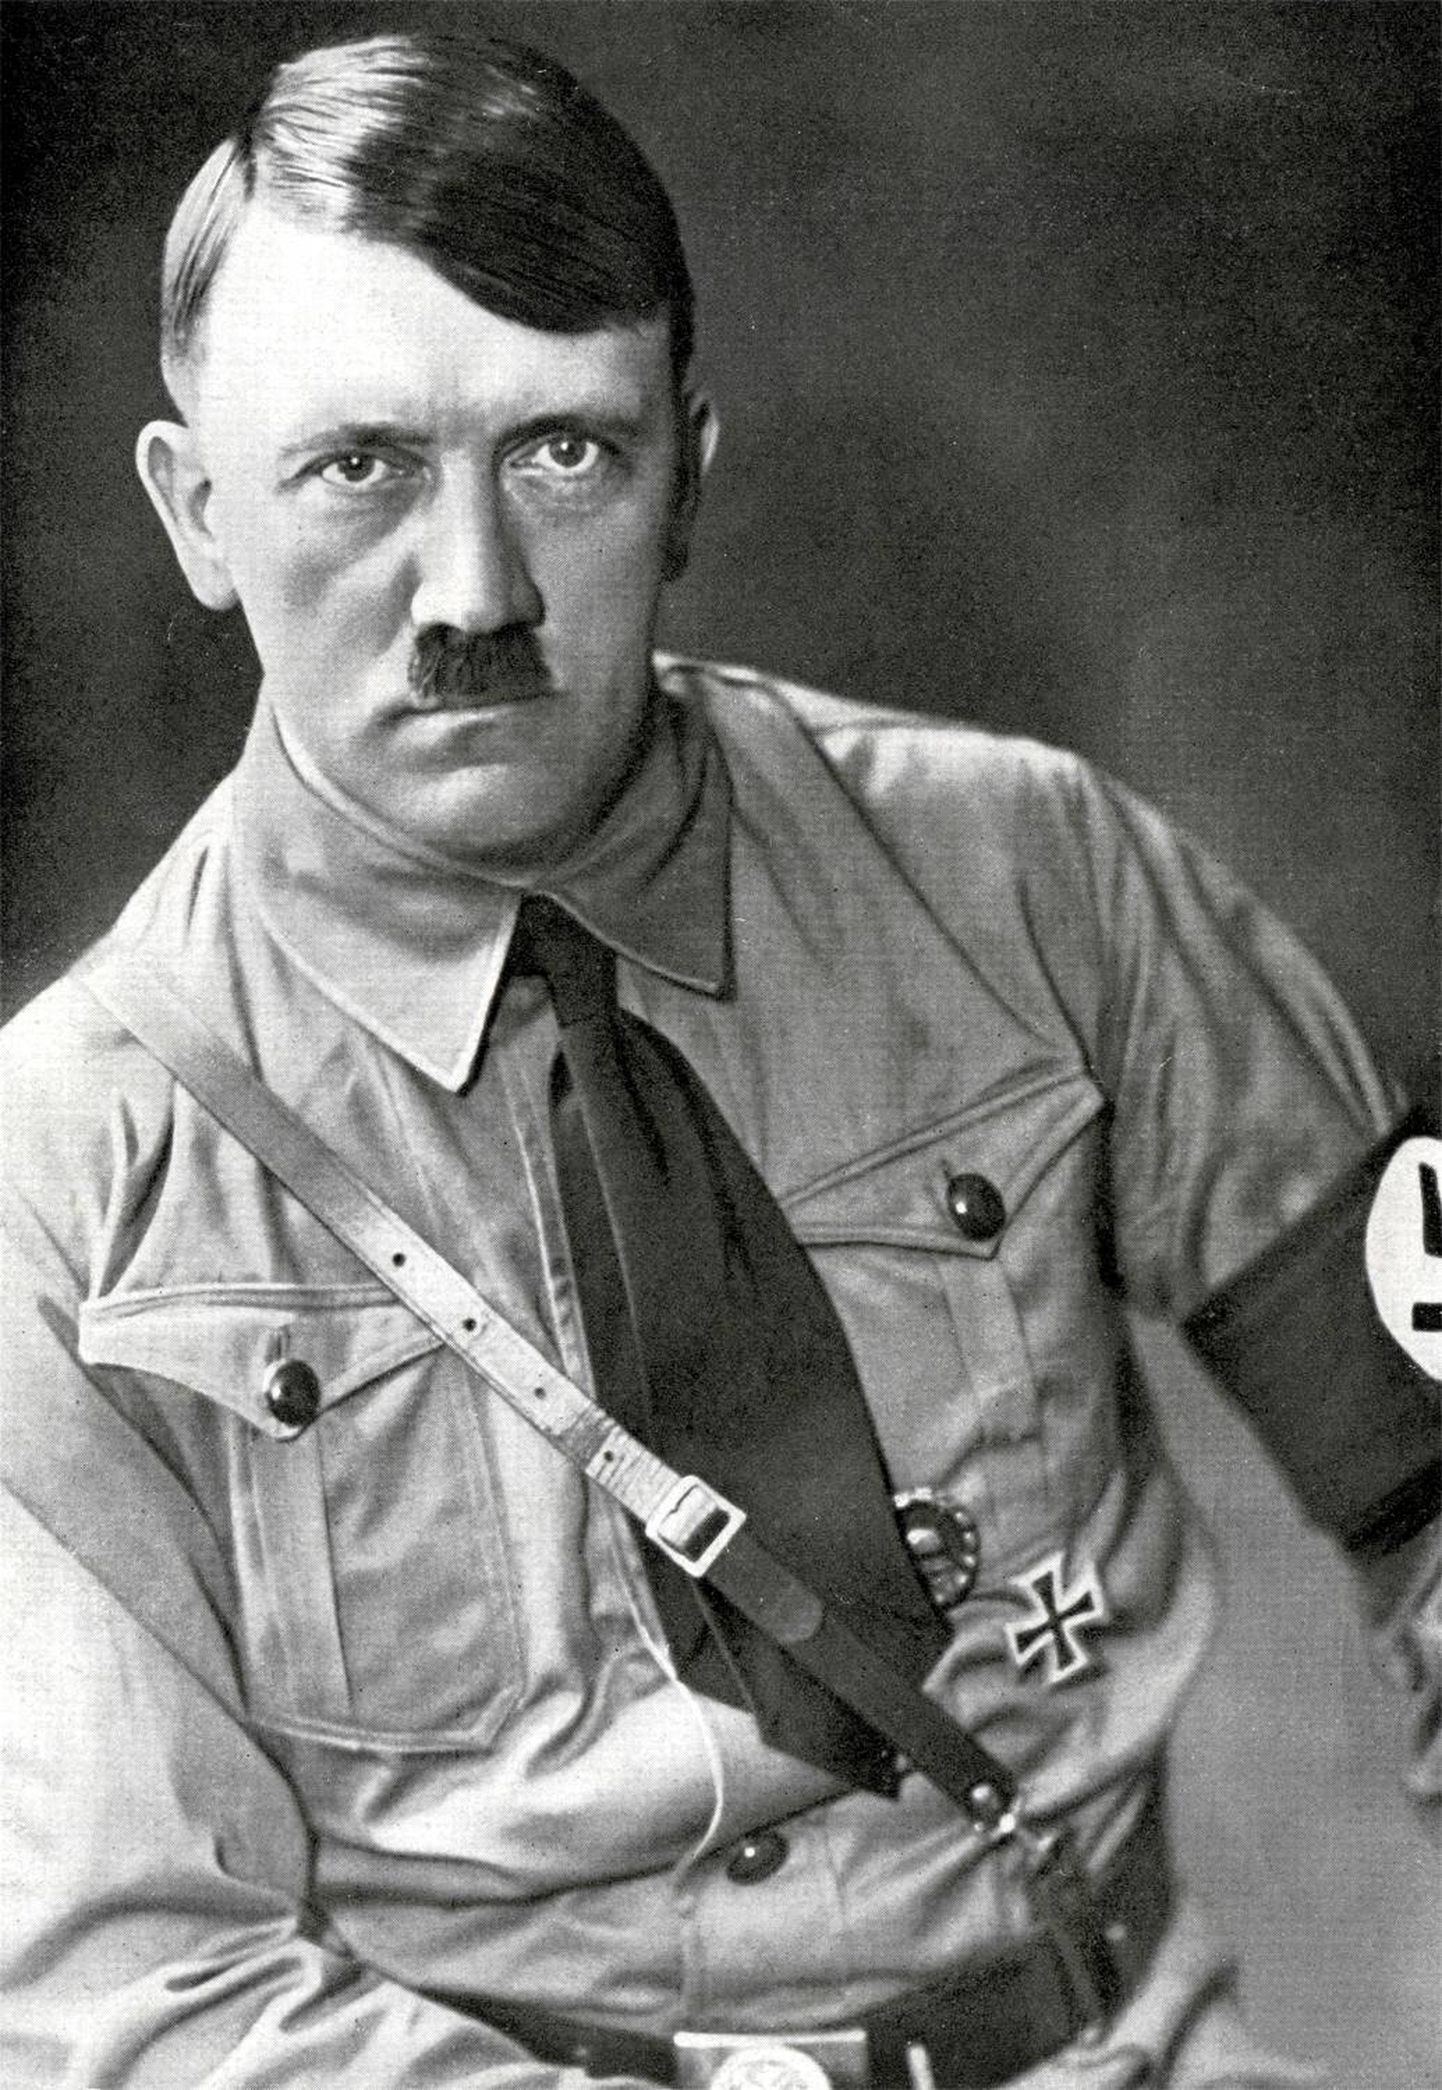 Portrait of Adolf Hitler in uniform, Germany x05874x

Portrait of Adolf Hitler in Uniform Germany x05874x